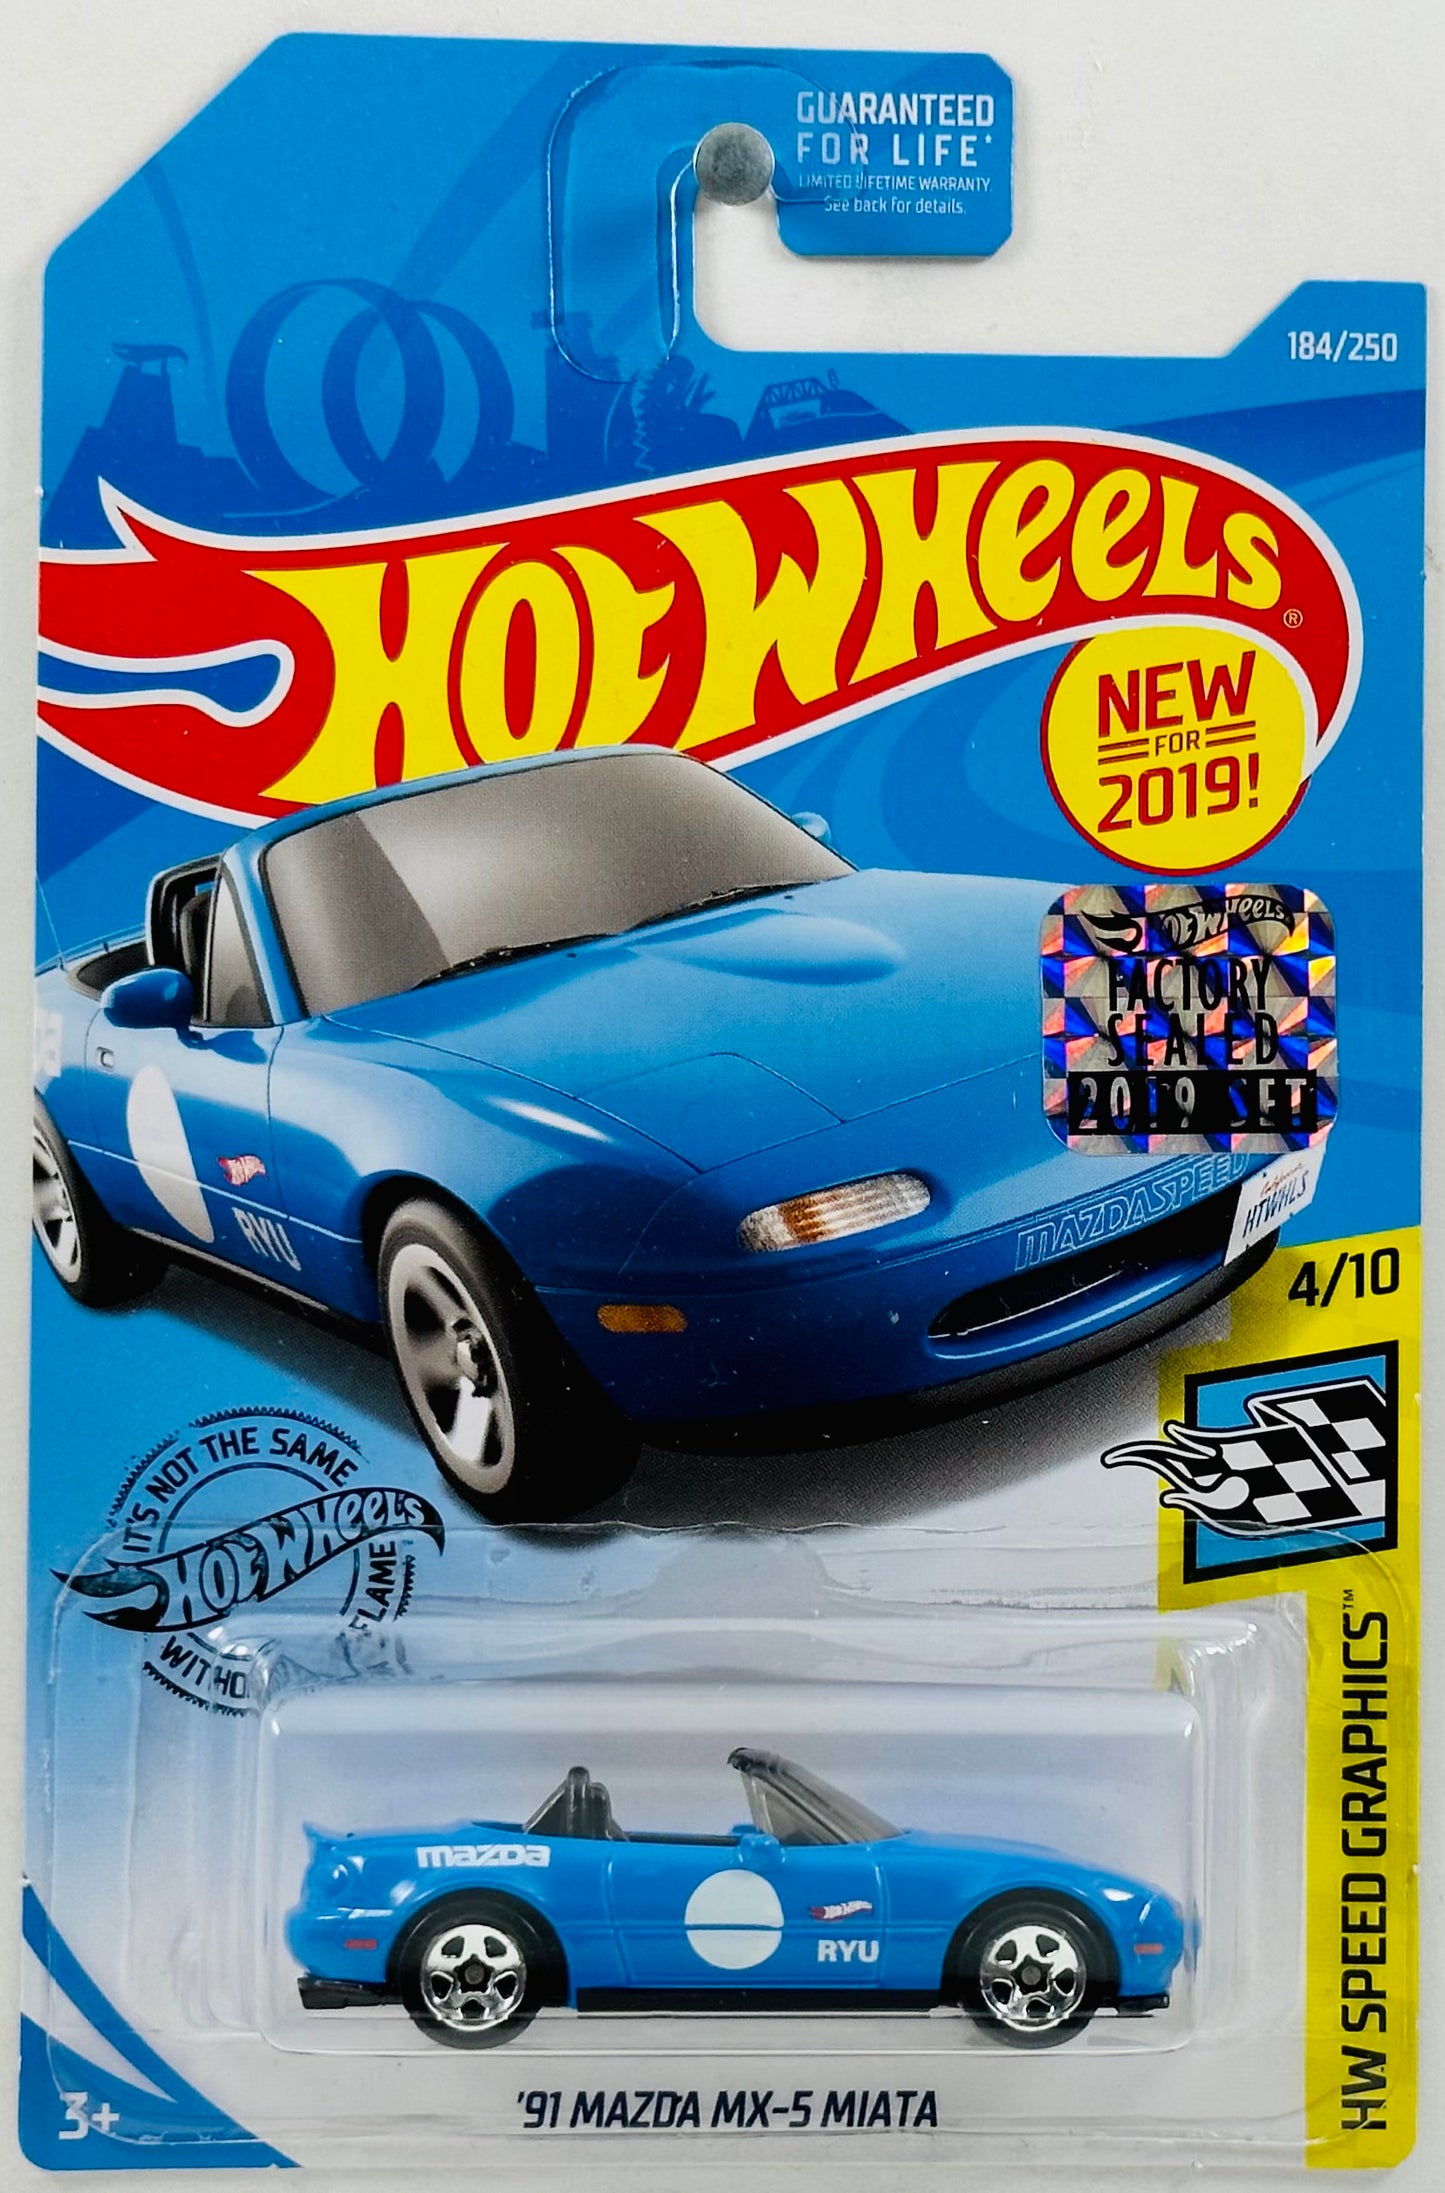 Hot Wheels 2019 - Collector # 184/250 - HW Speed Graphics 04/10 - '91 Mazda MX-5 Miata - Blue - FSC